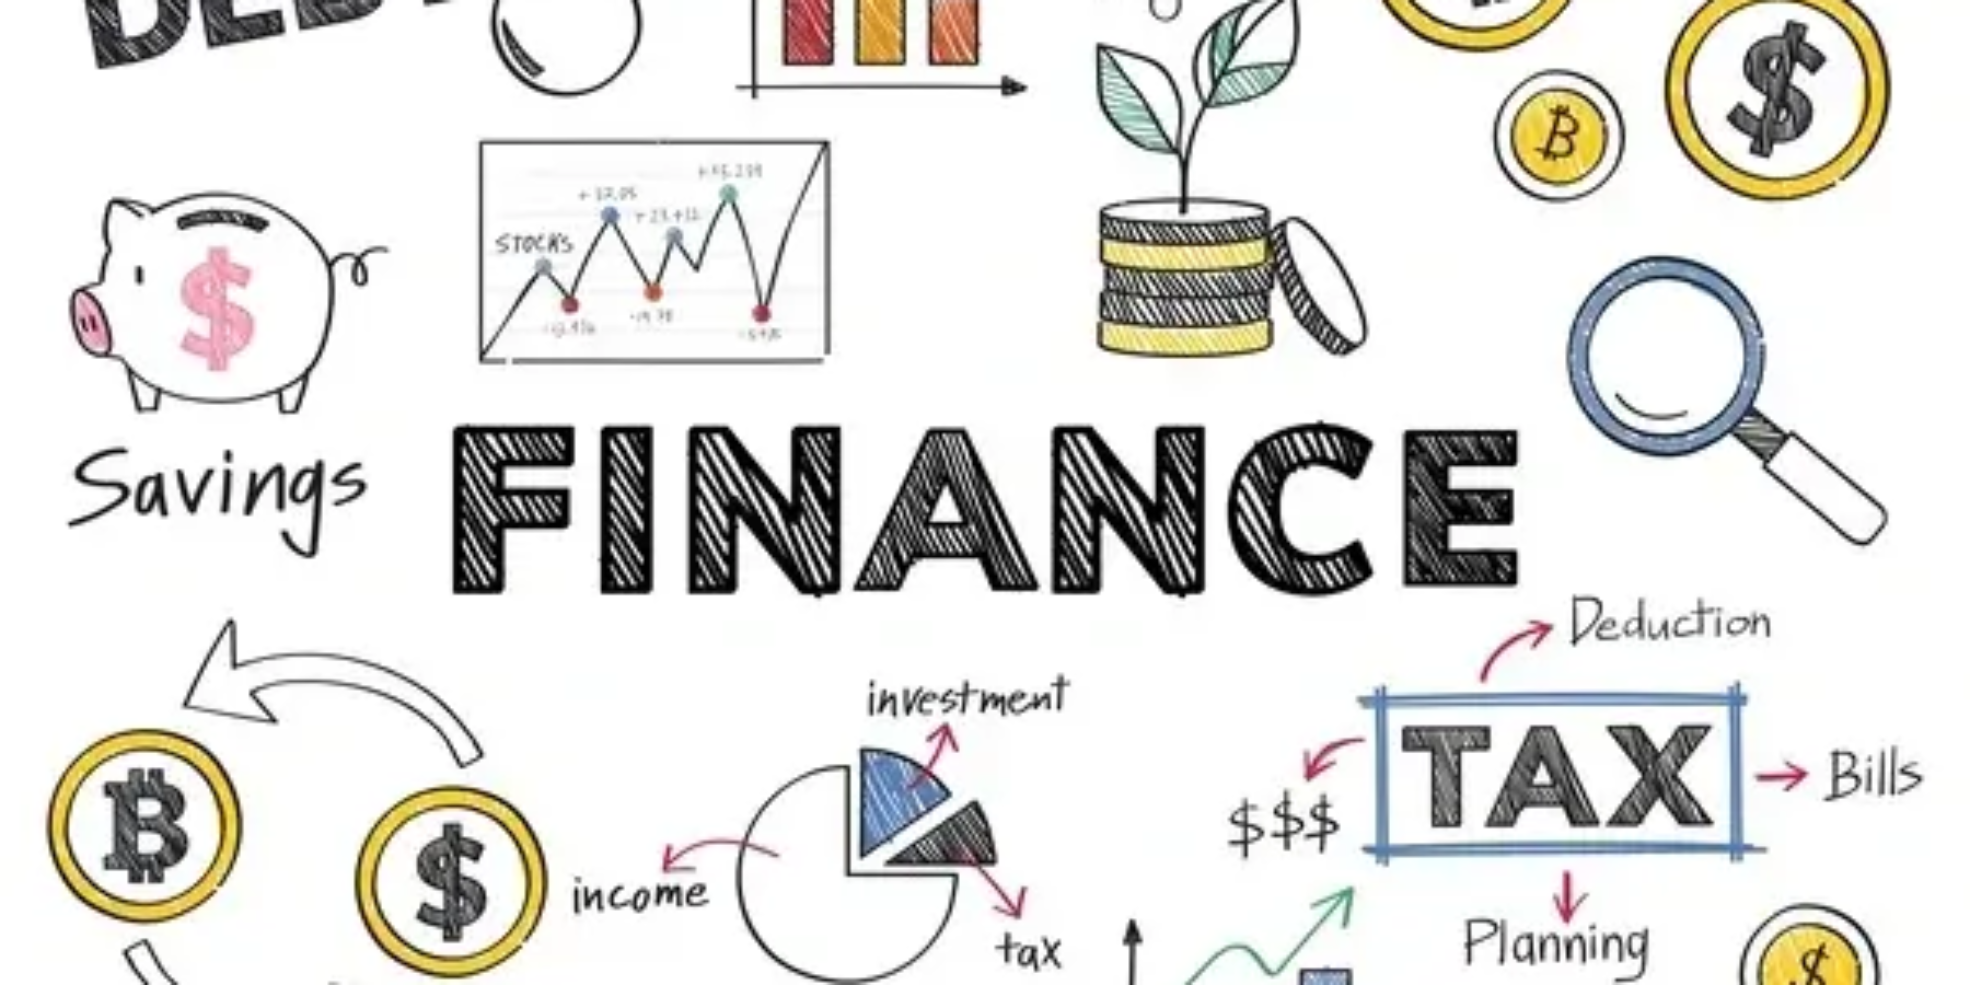 Finances-financial-strategy